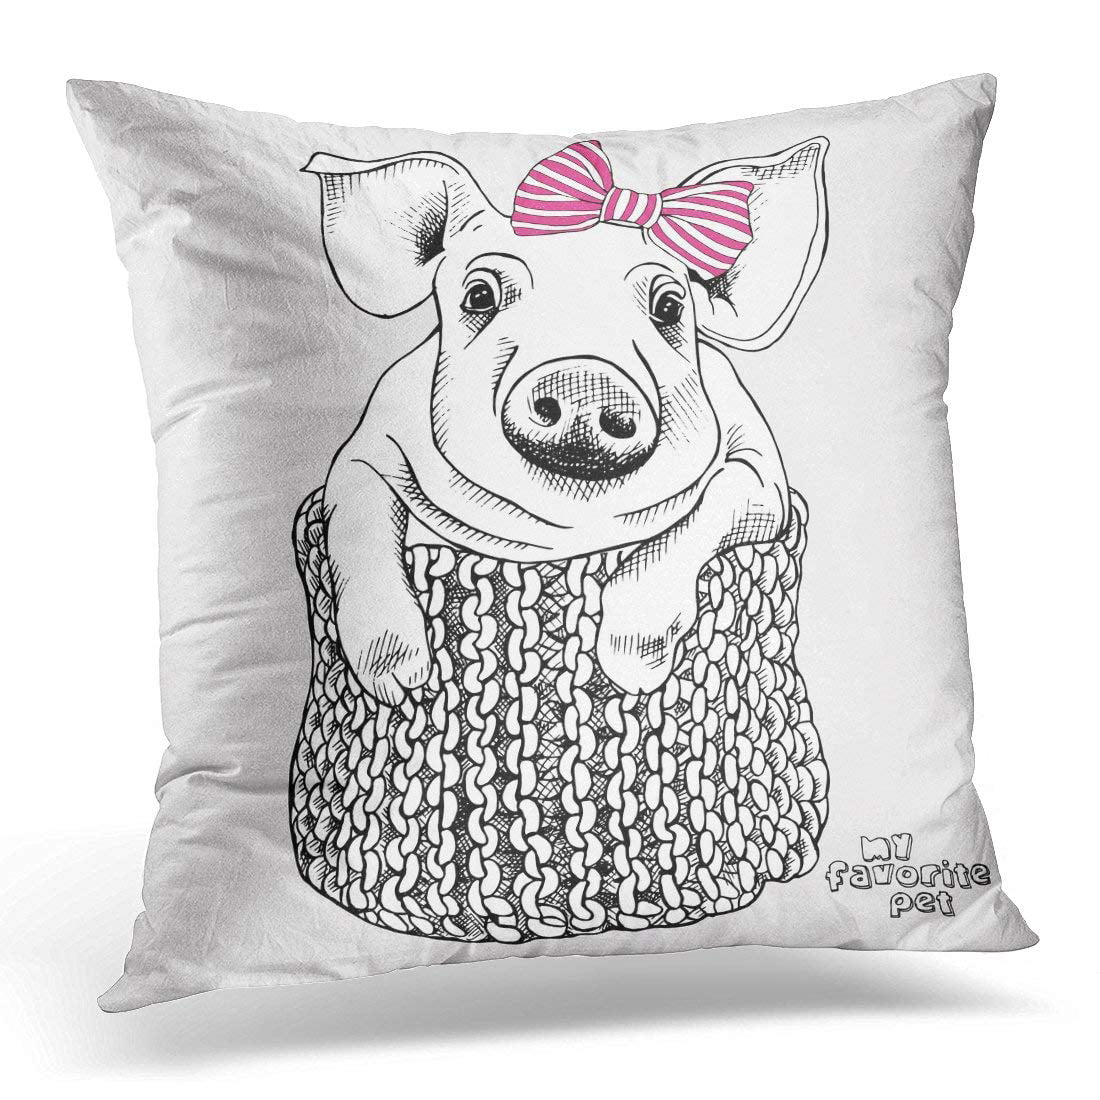 Retro Oil Painting Cartoon Animal Pig Dog Flax Pillow Case Cushion Cover H 